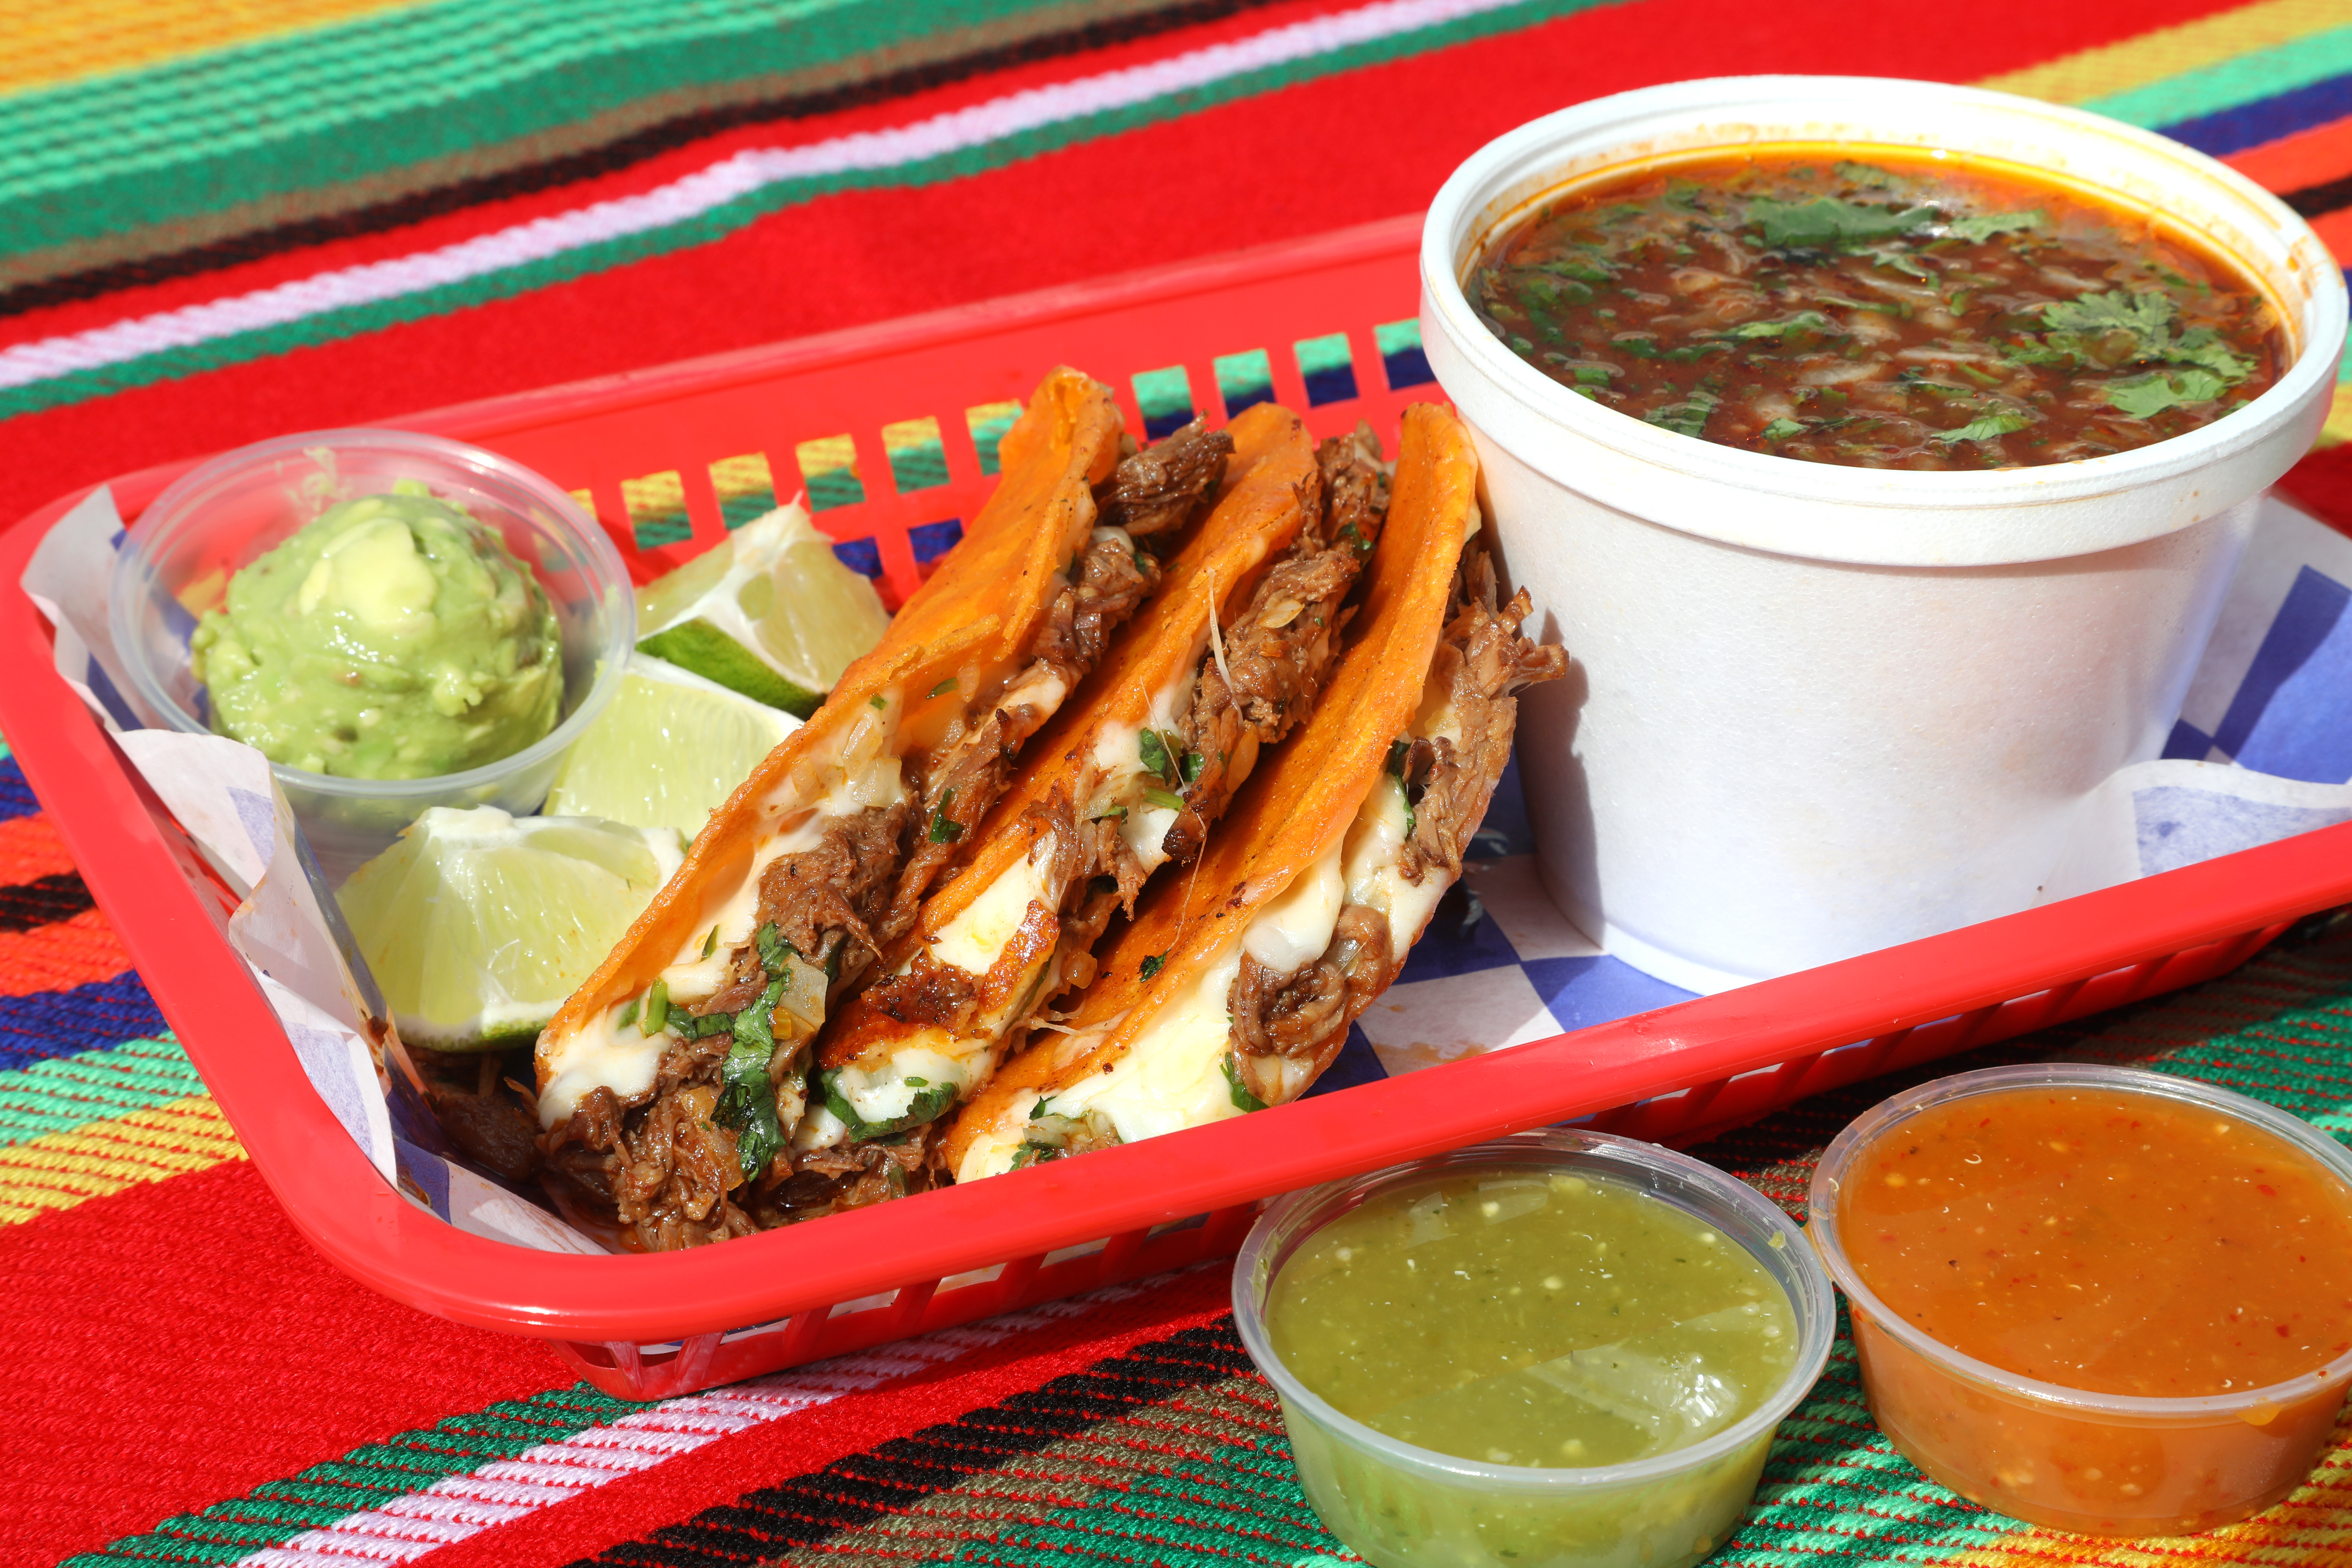 Tampa Bay's latest food craze? Quesabirria tacos